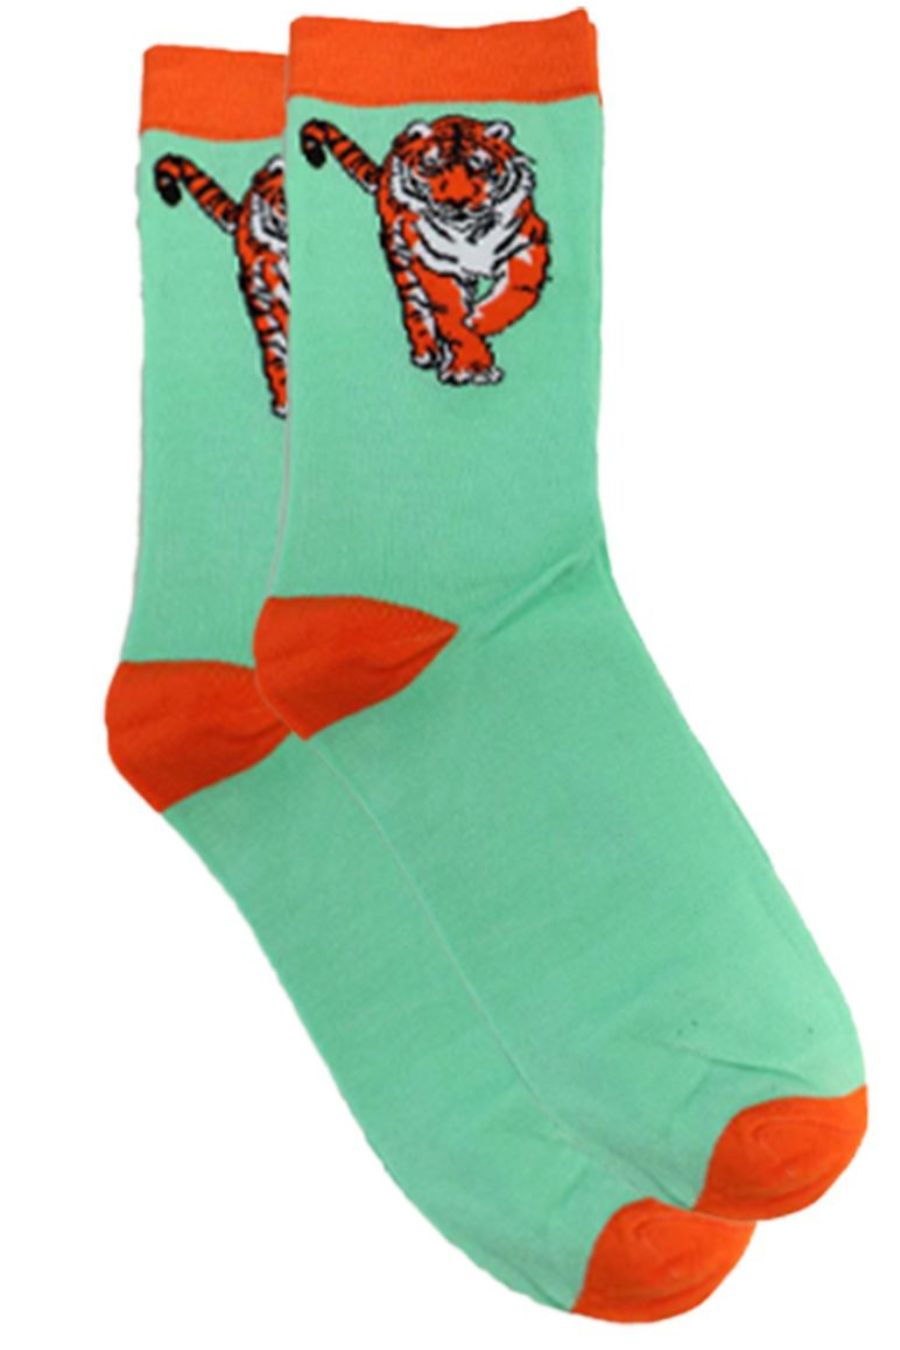 green bamboo socks with an orange tiger